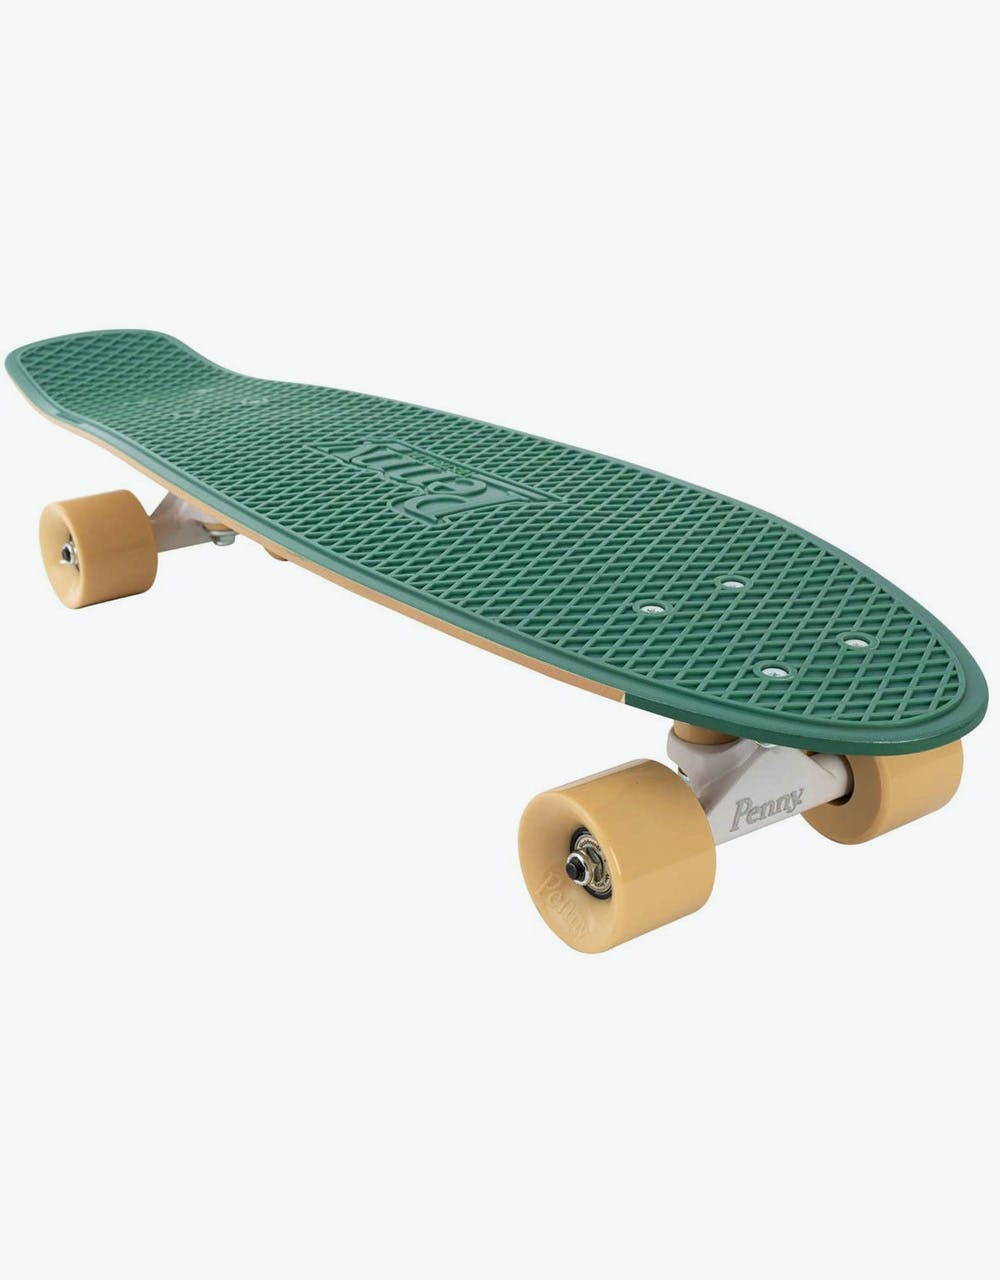 Penny Skateboards Classic Cruiser - 27" - Swirl Green